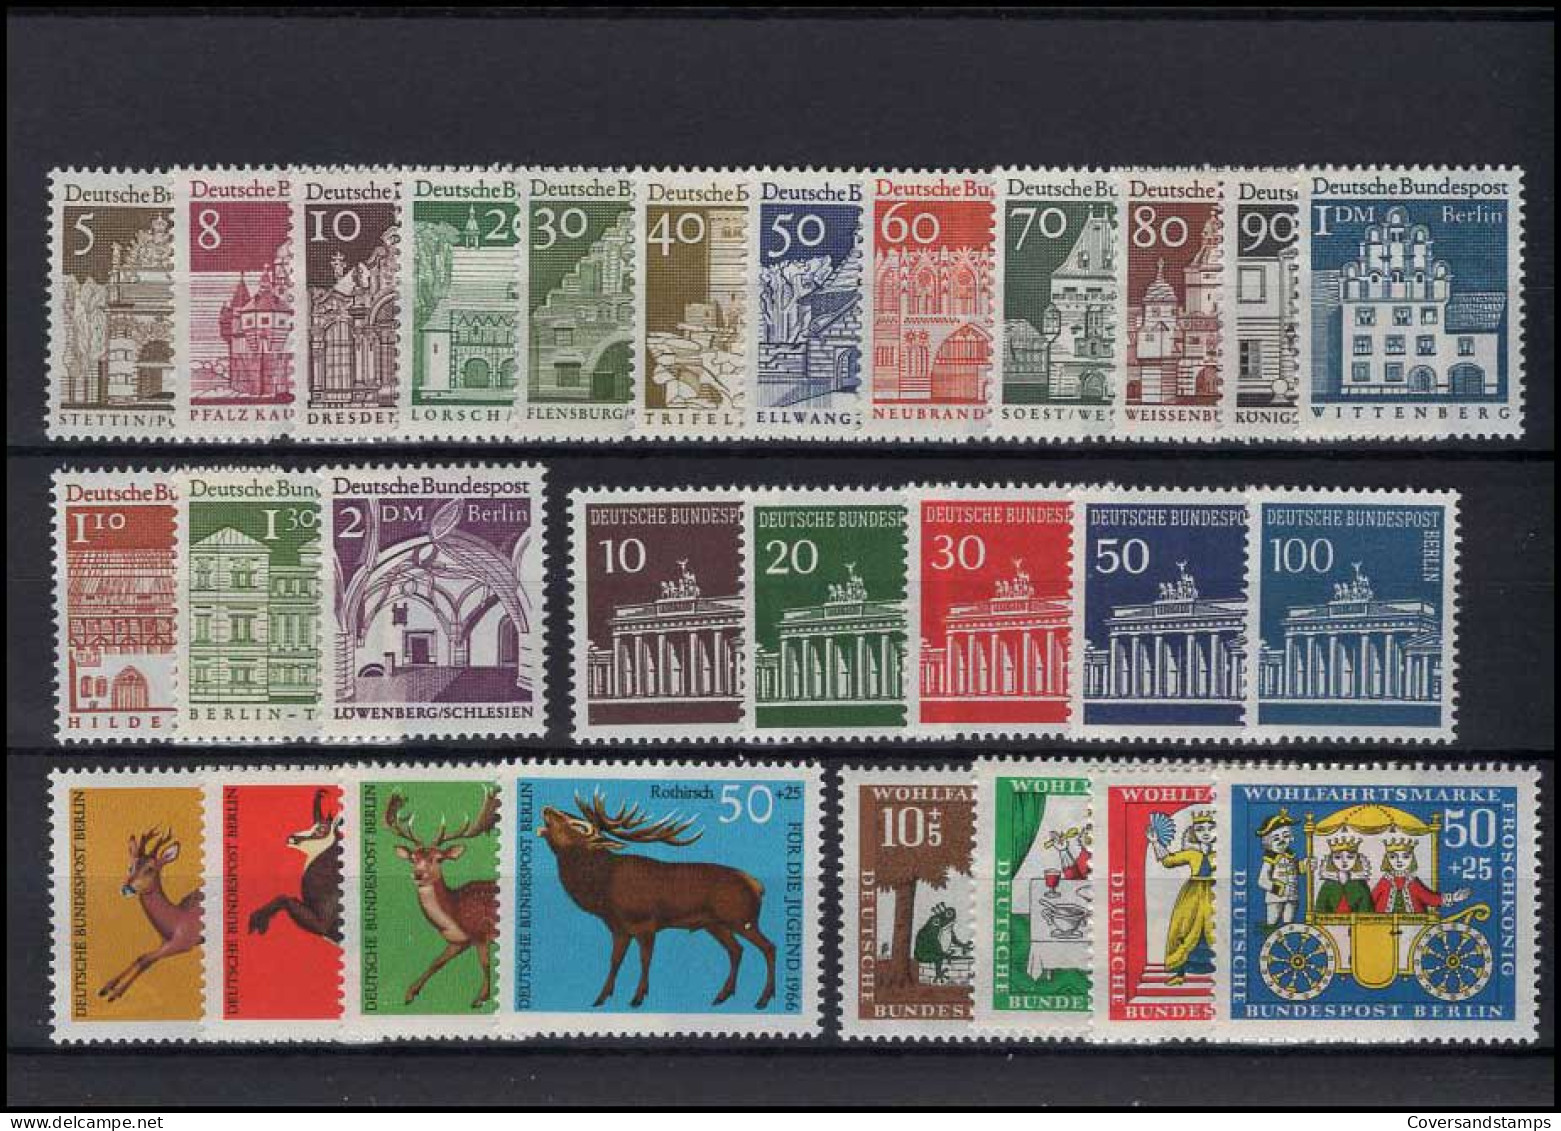   Bundespost Berlin - Volledig Jaar / Jahrgang 1966  MNH - Ungebraucht